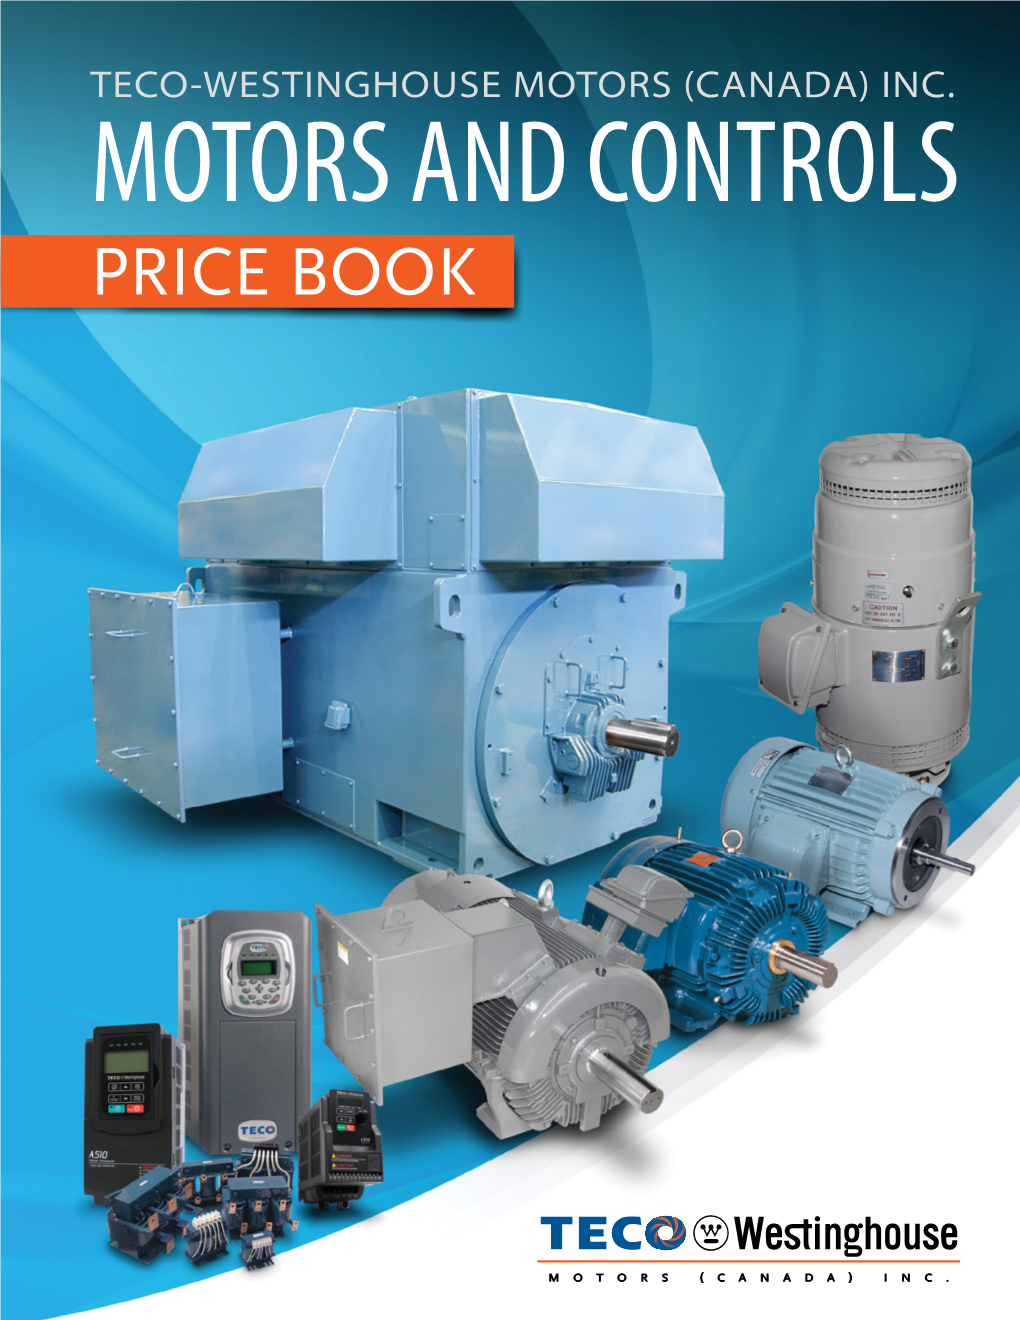 Price Book Teco Westinghouse Motors (Canada) Inc